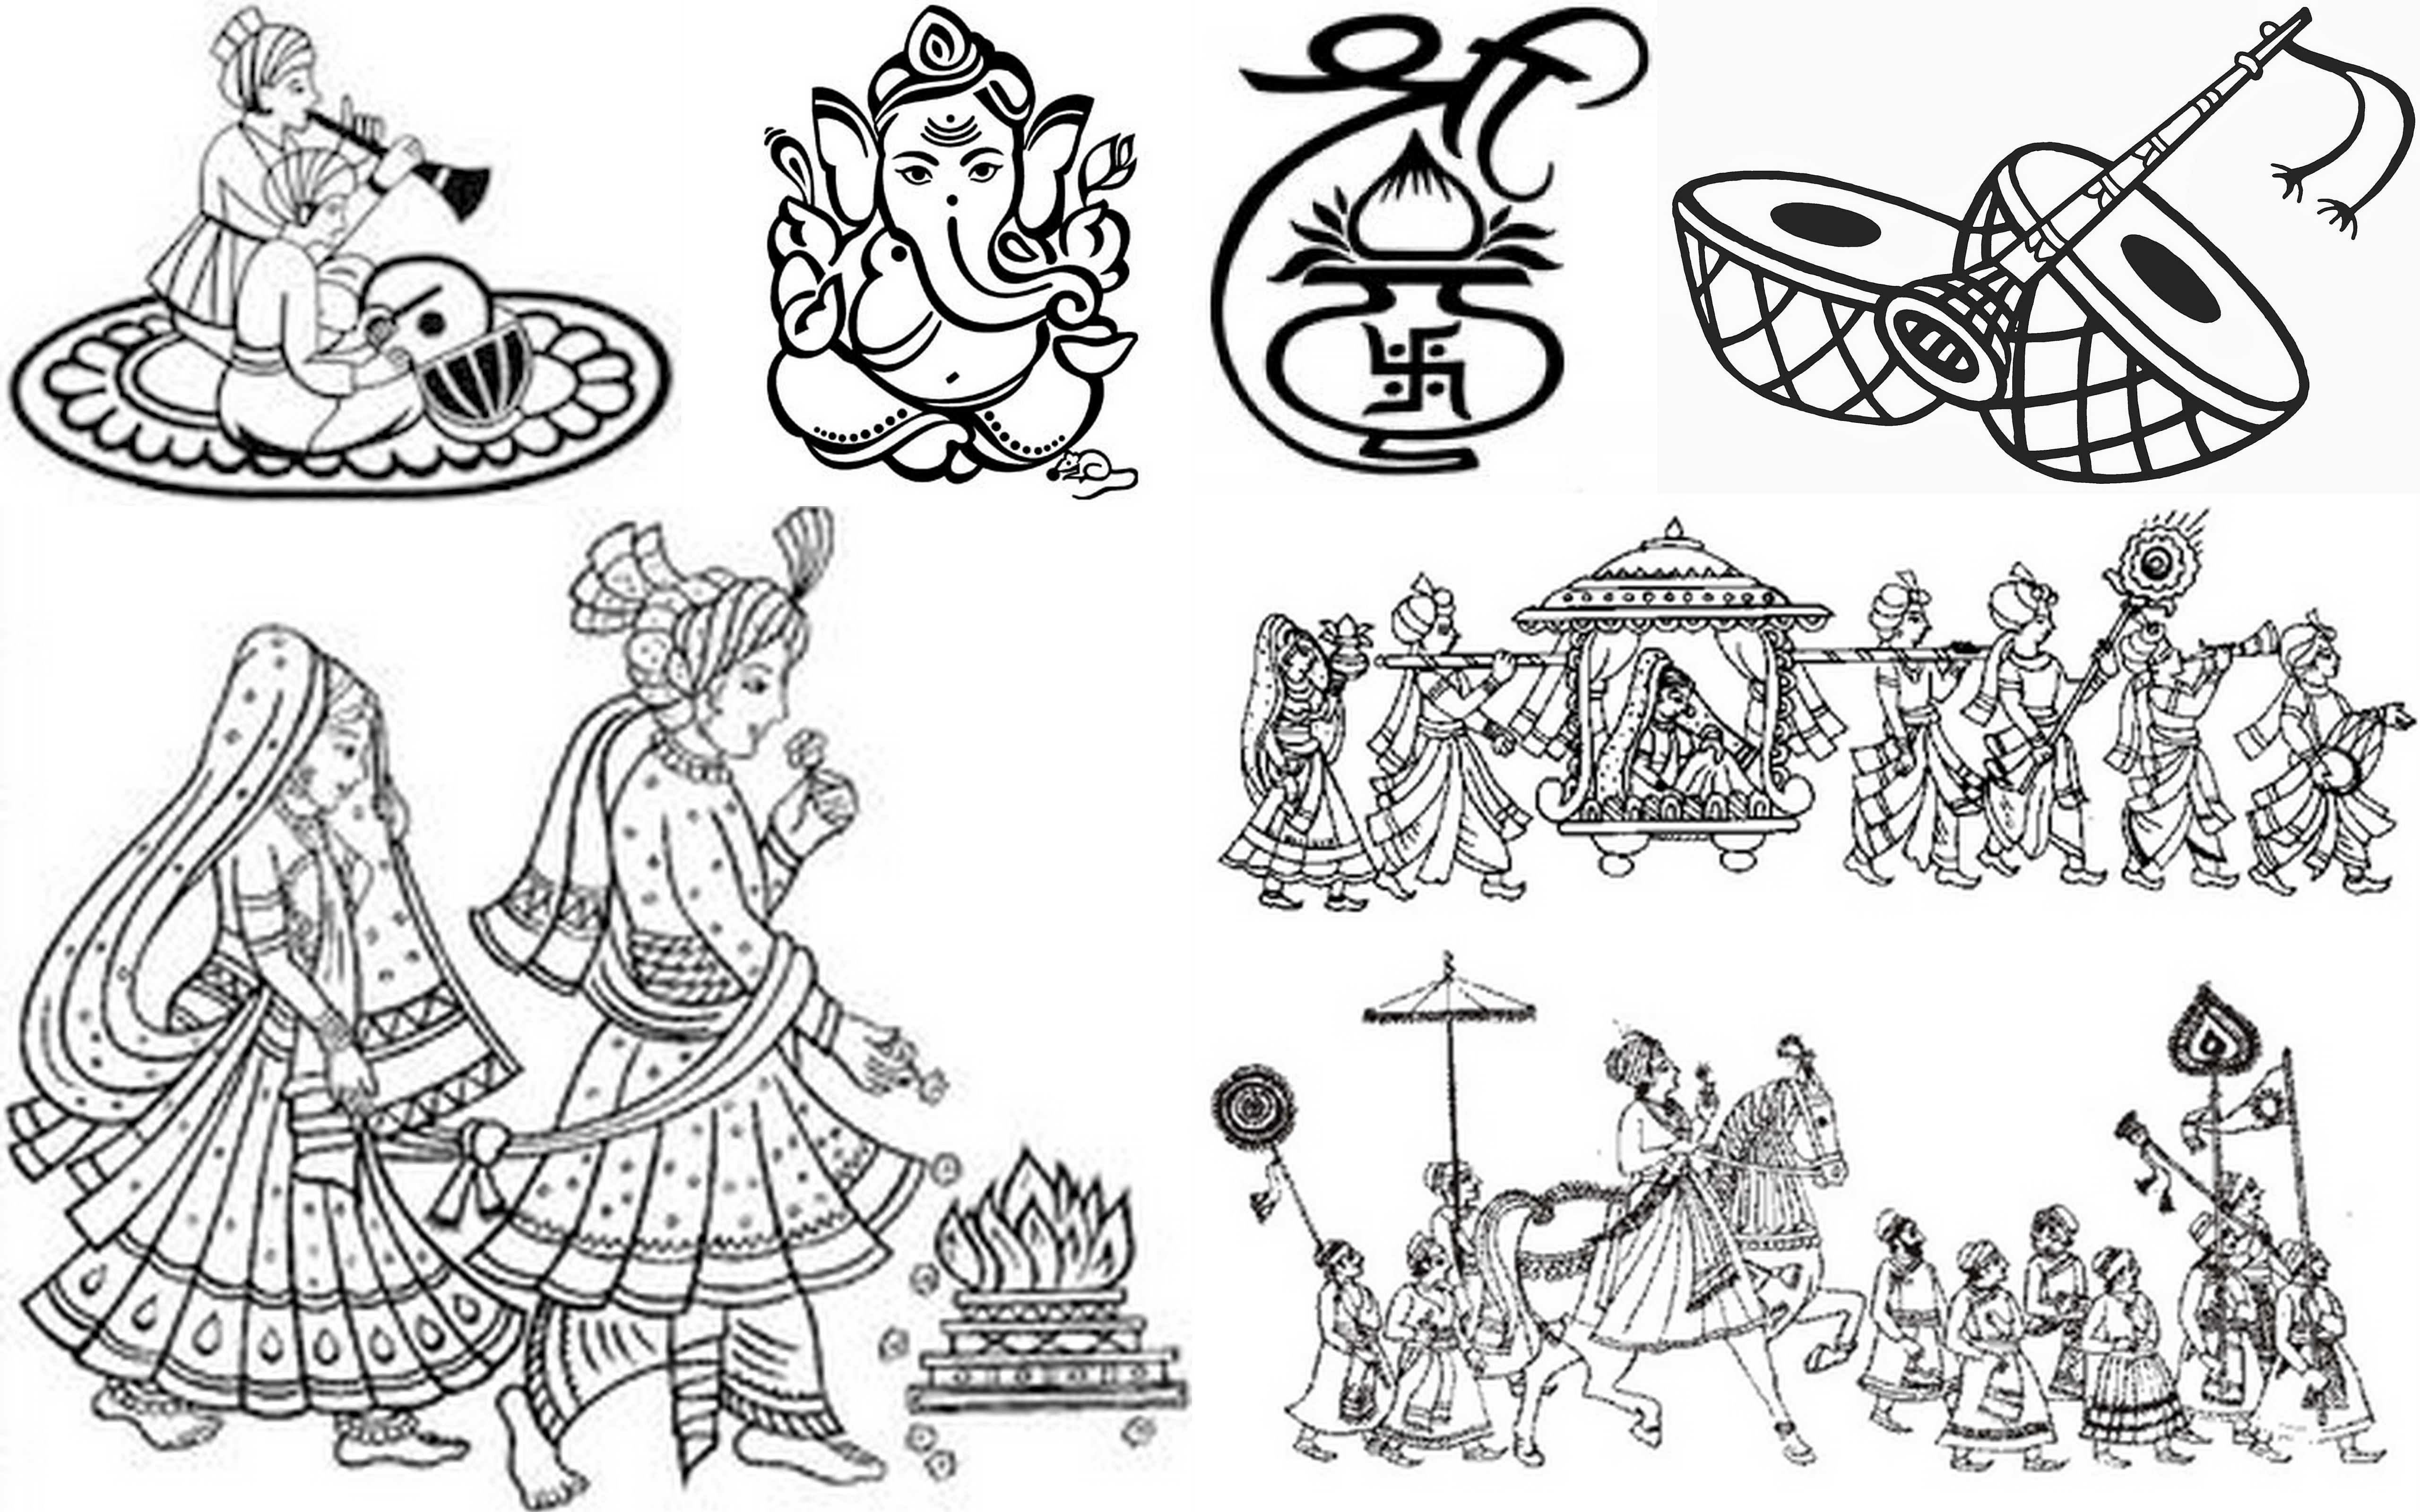 Invitation clipart hindu wedding invitation. Indianweddingcards symbols cards for